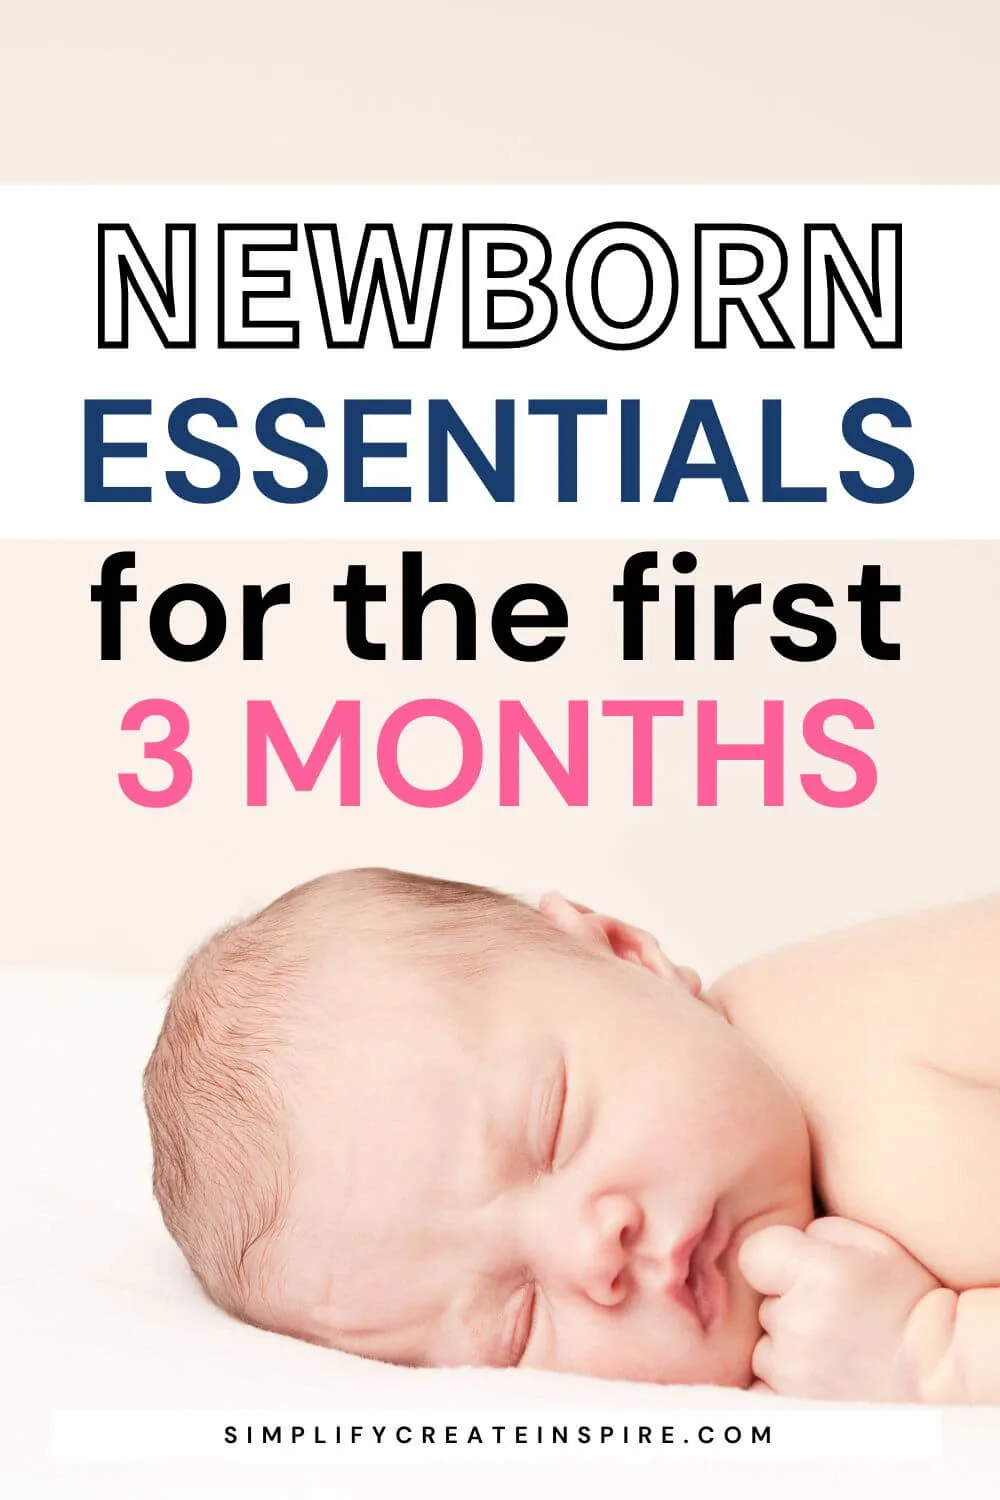 Newborn essentials for the first 3 months